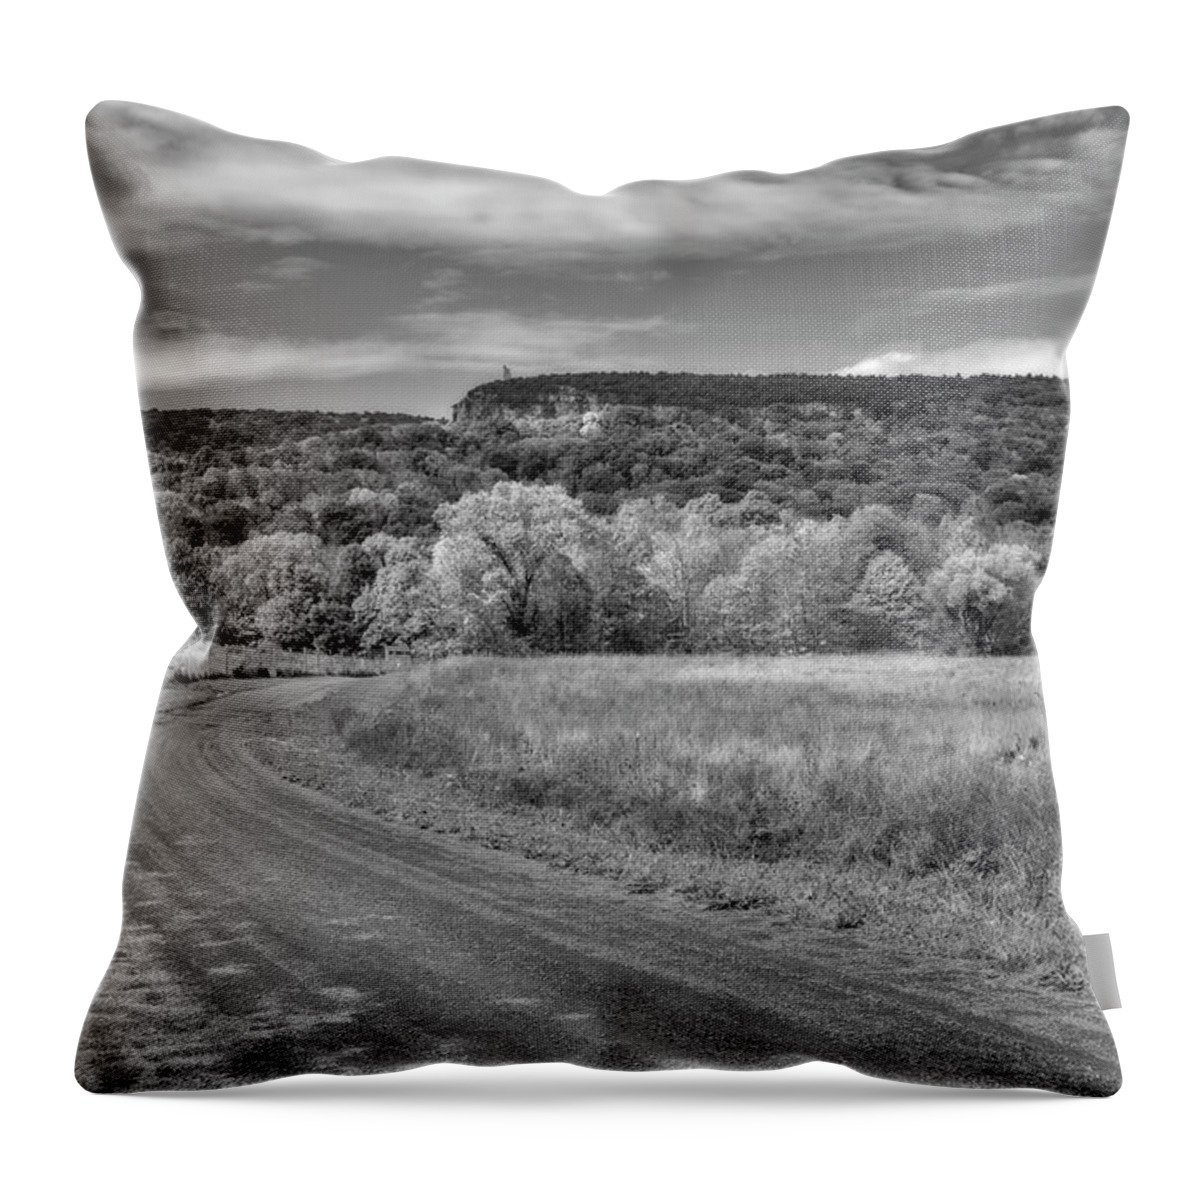 Shawangunk Throw Pillow featuring the photograph Shawangunk Mountain Hudson Valley NY #1 by Susan Candelario